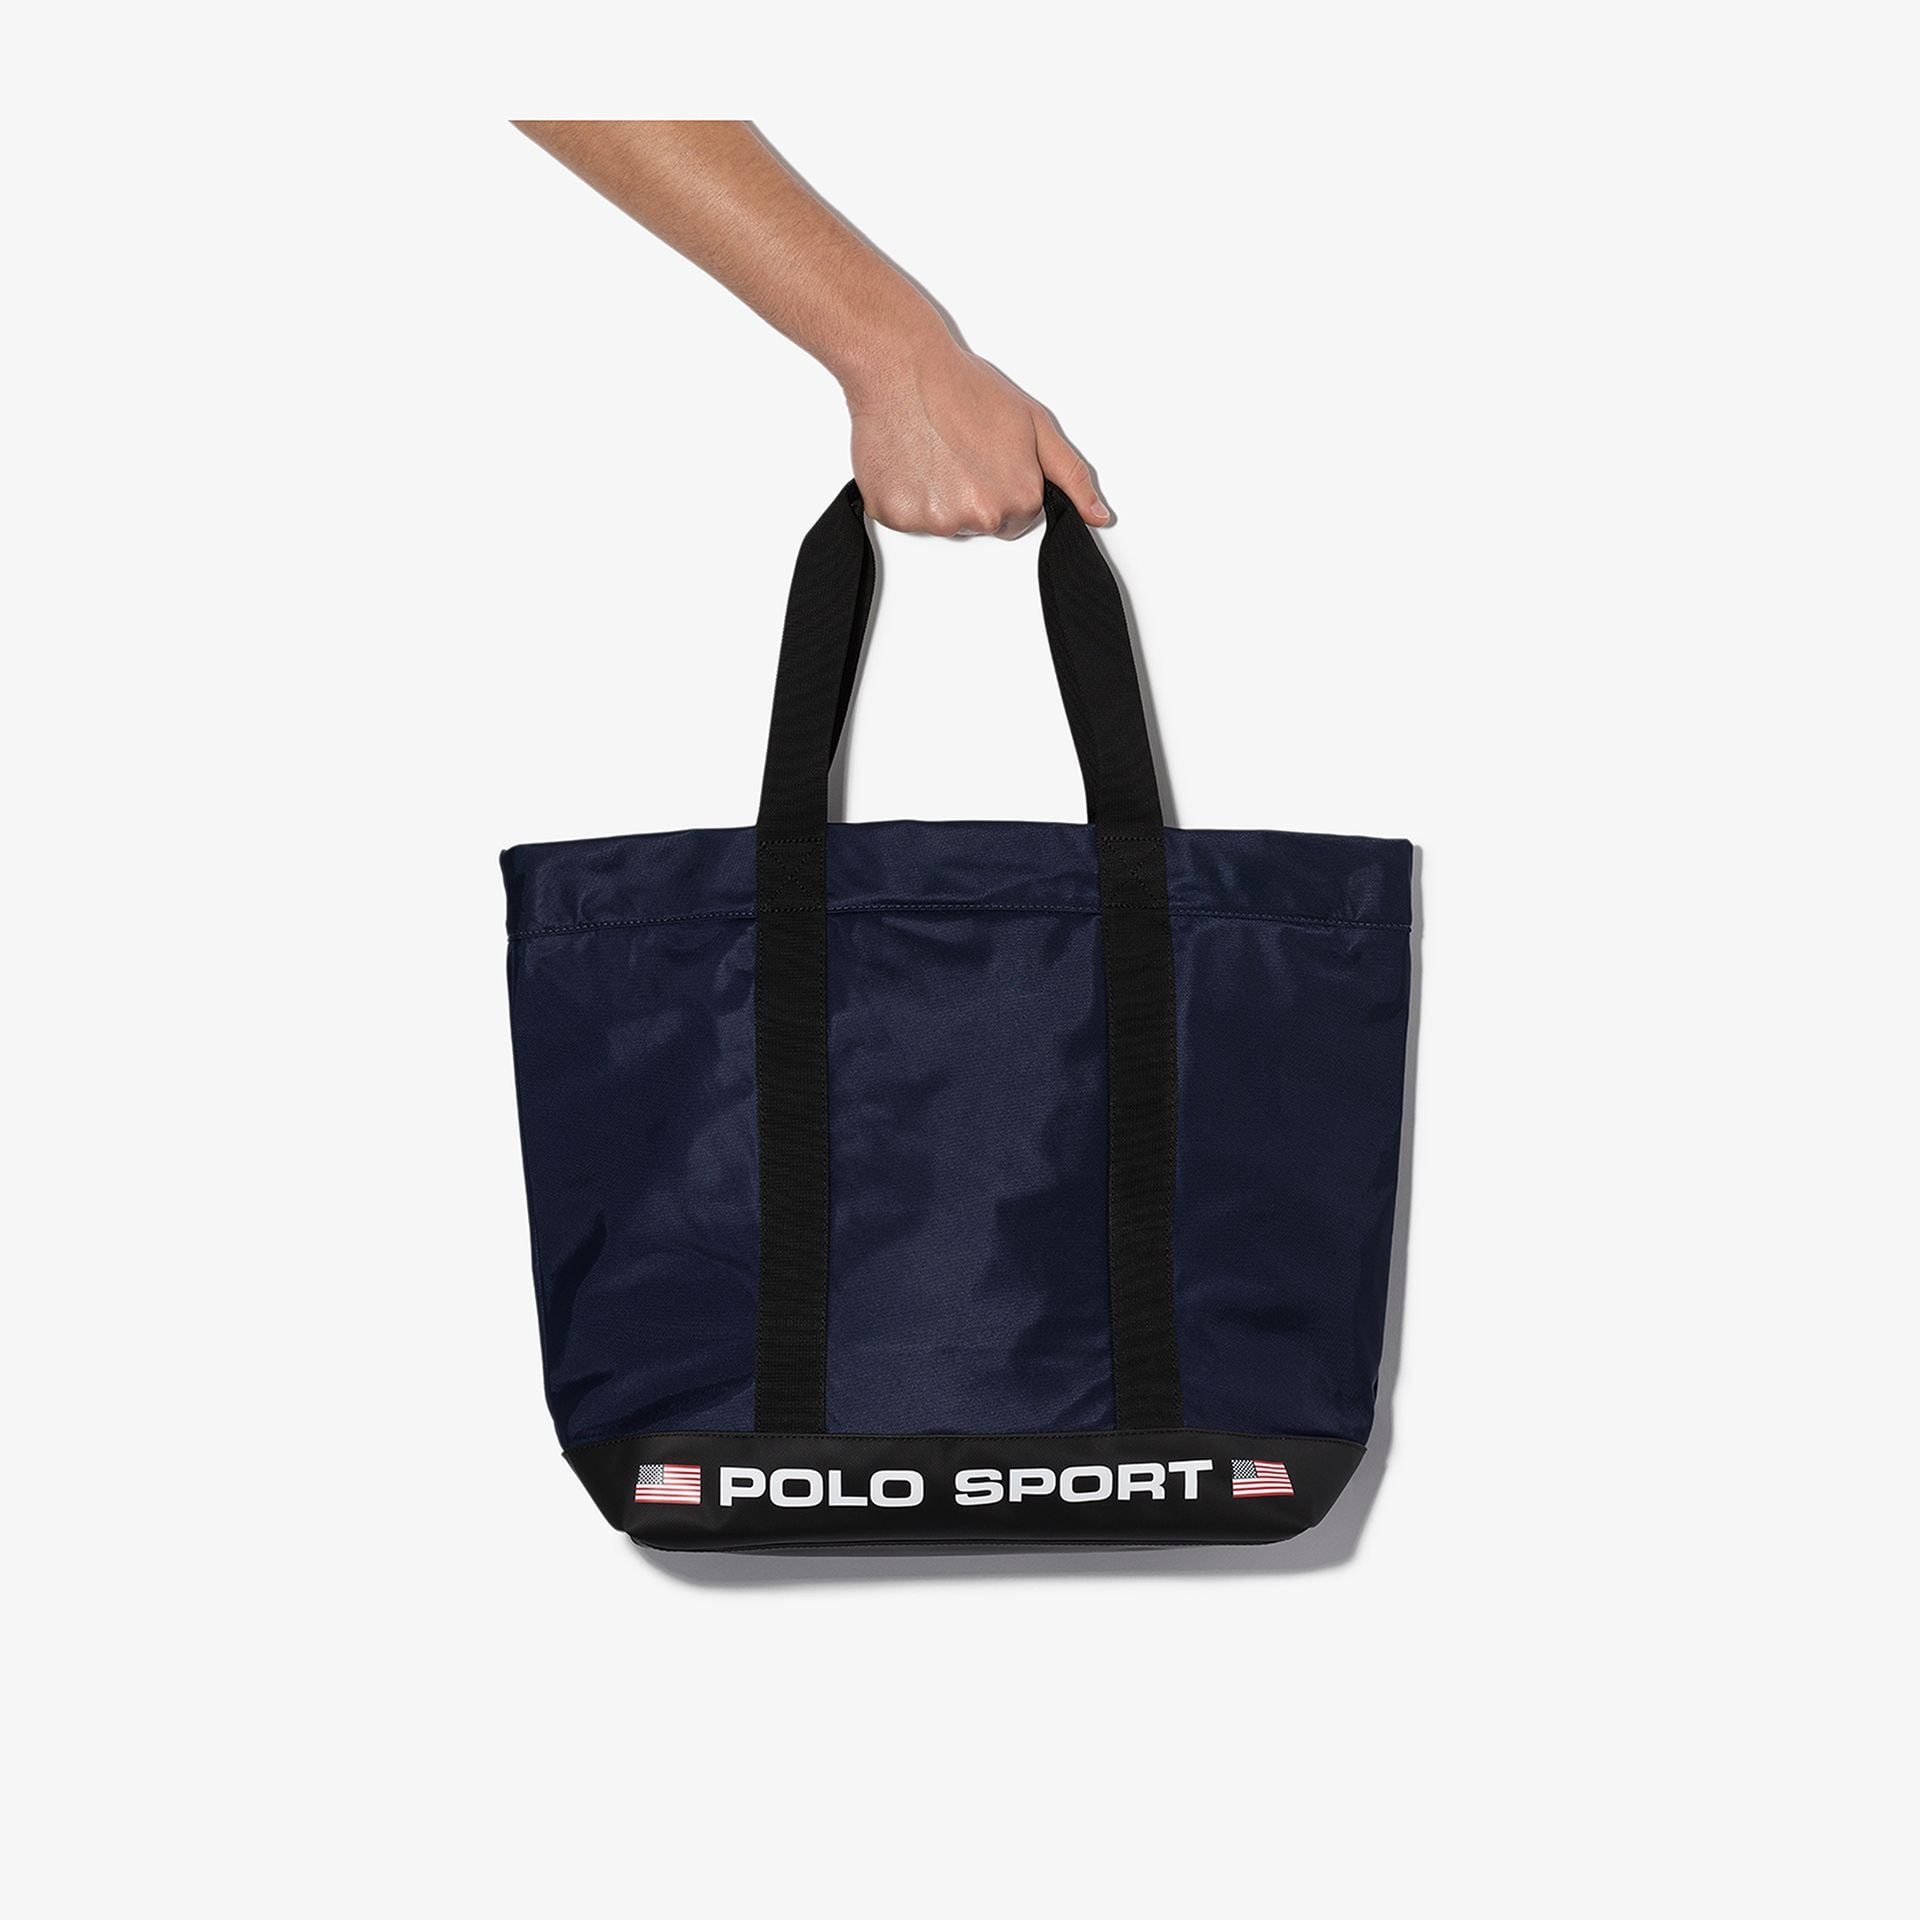 polo sport tote bag